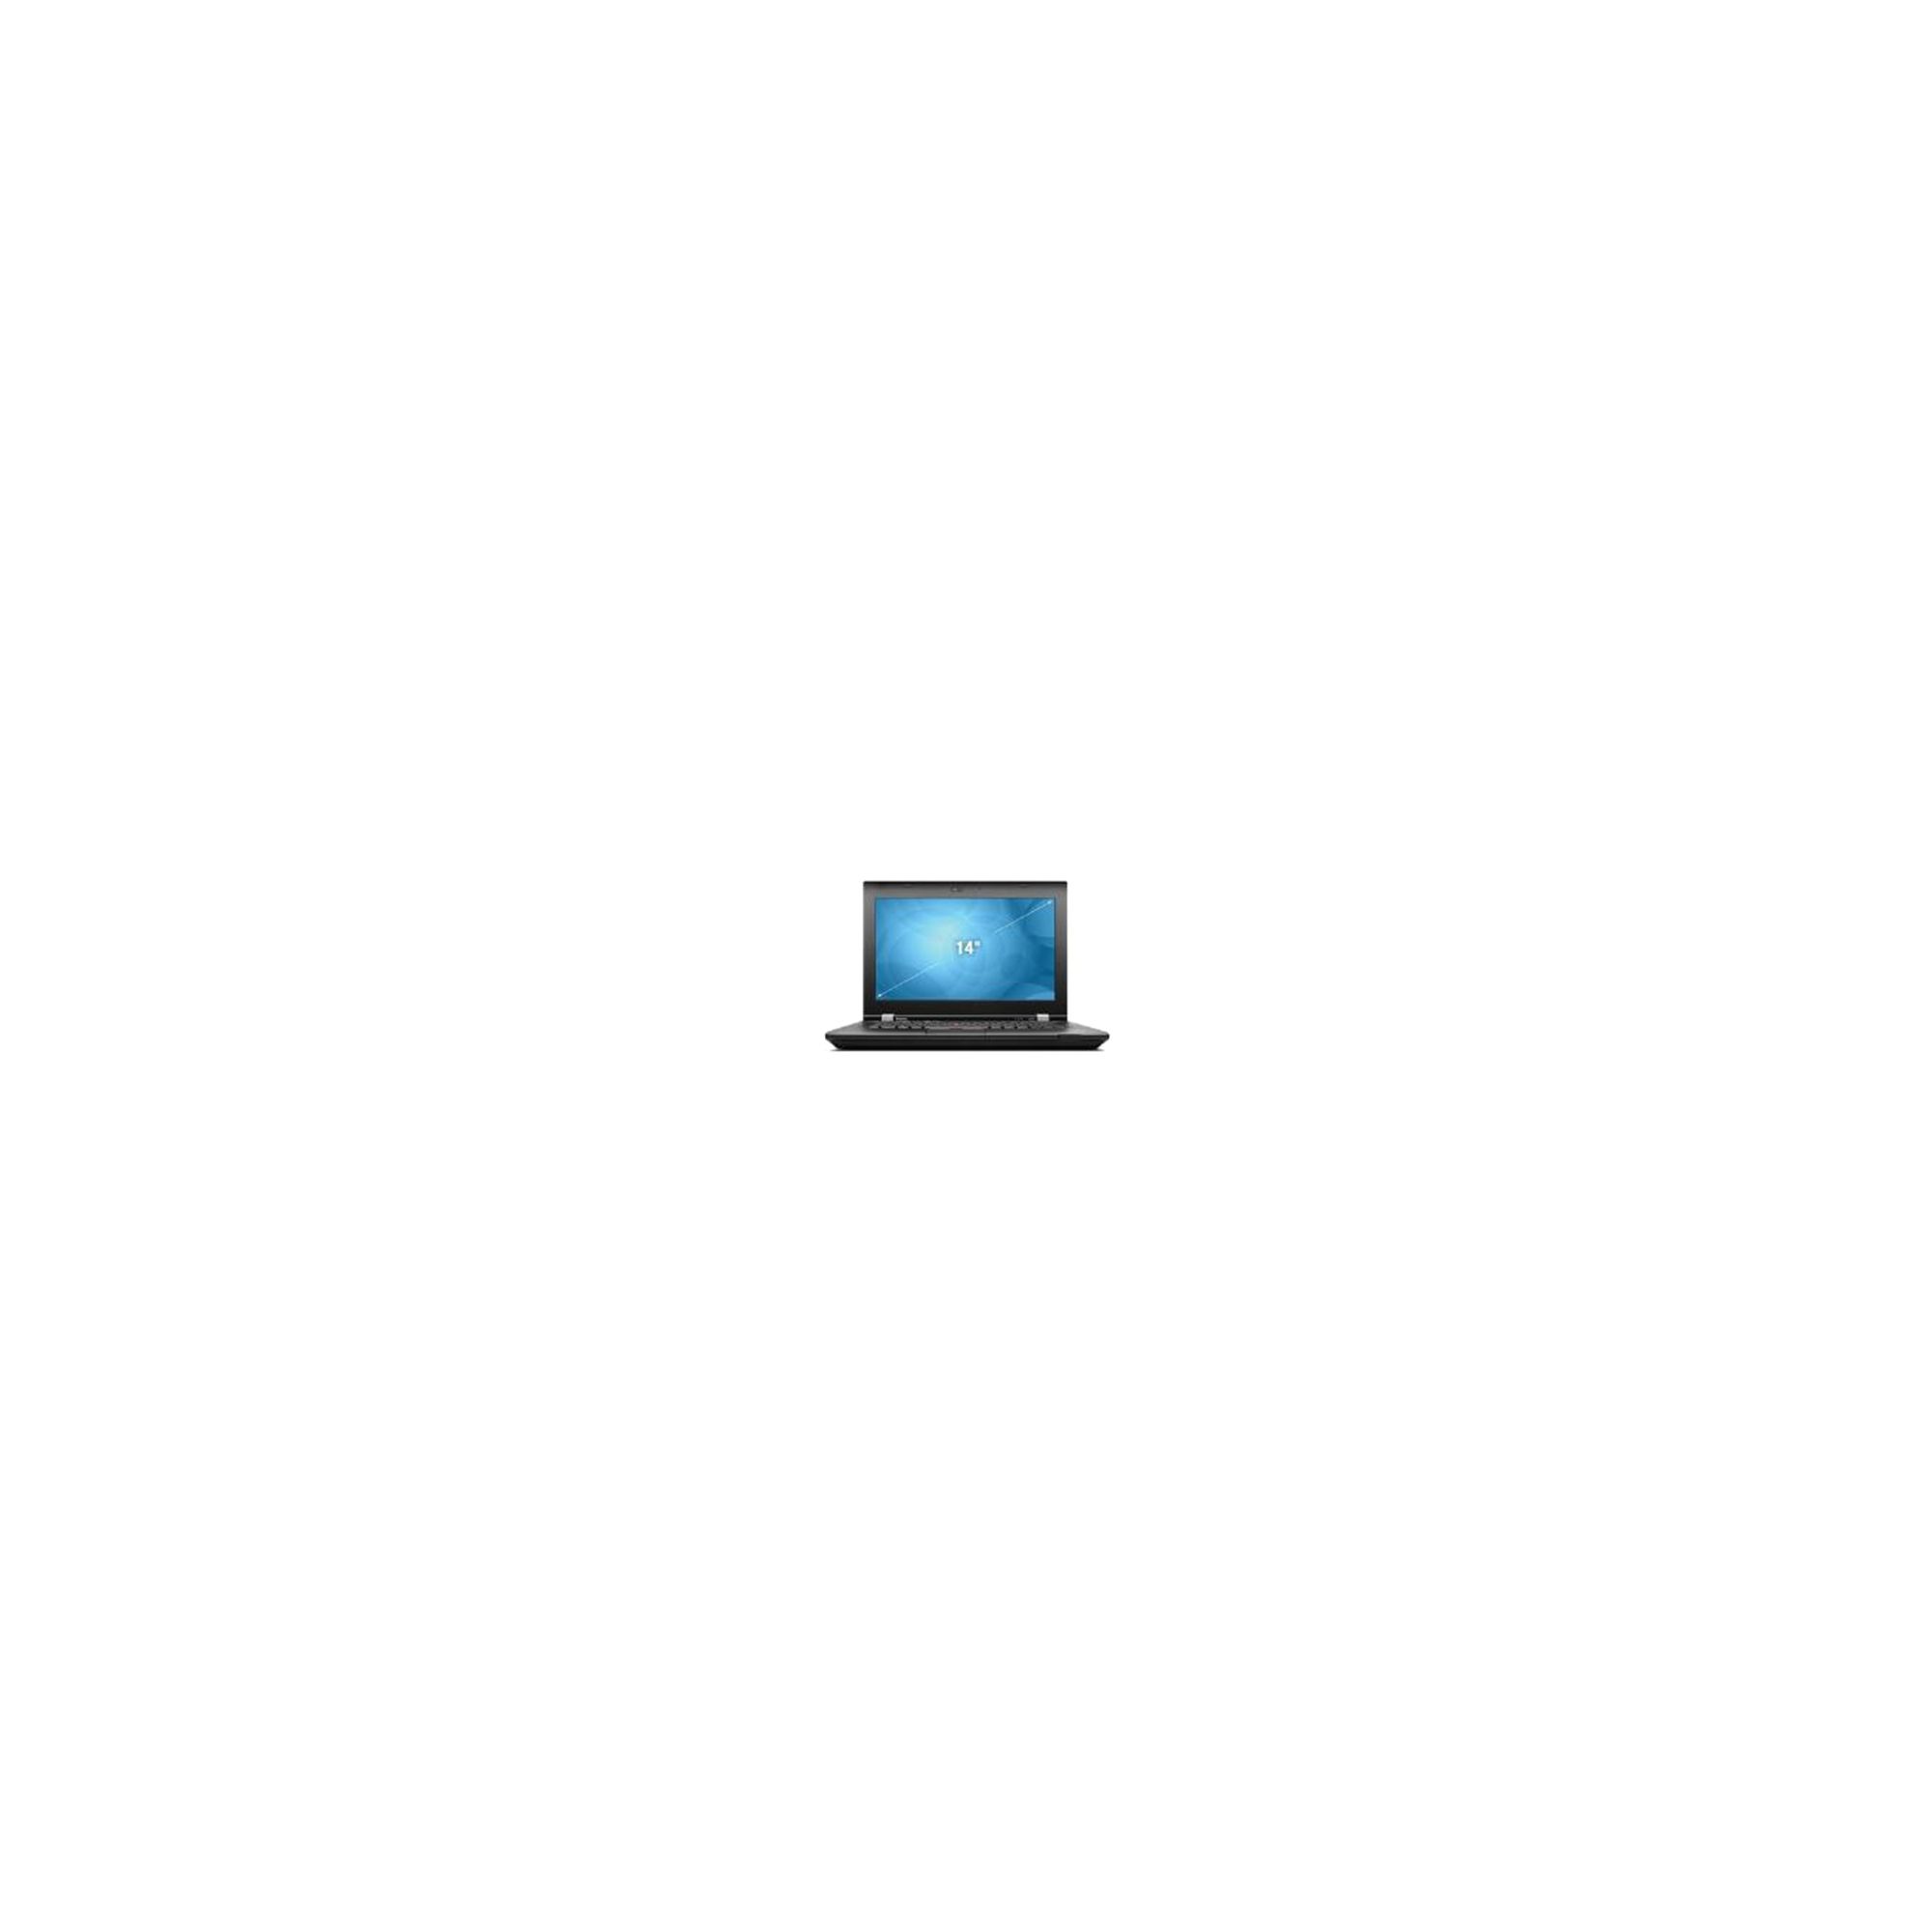 Lenovo ThinkPad L430 246834G (14.0 inch) Notebook Core i3 (2370M) 2.4GHz 4GB 500GB DVD±RW WLAN BT Webcam Windows 7 Pro 64-bit (Intel HD Graphics) at Tescos Direct